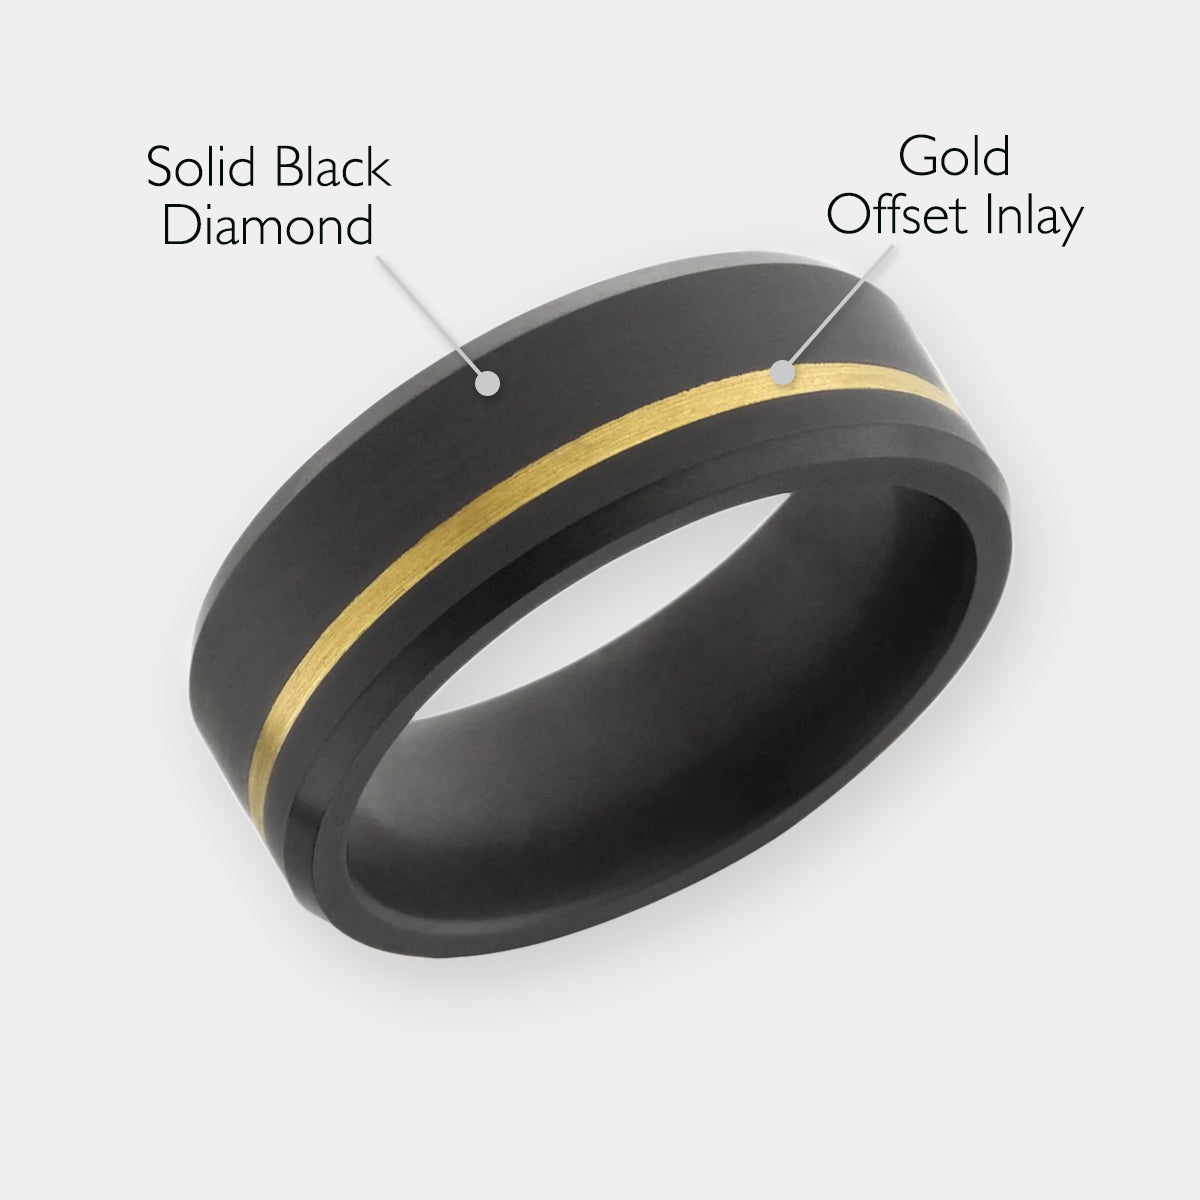 ElysiumBlack.com | Elysium ARES - Solid Black Diamond Ring - Offset Inlay Yellow Gold - Image 2